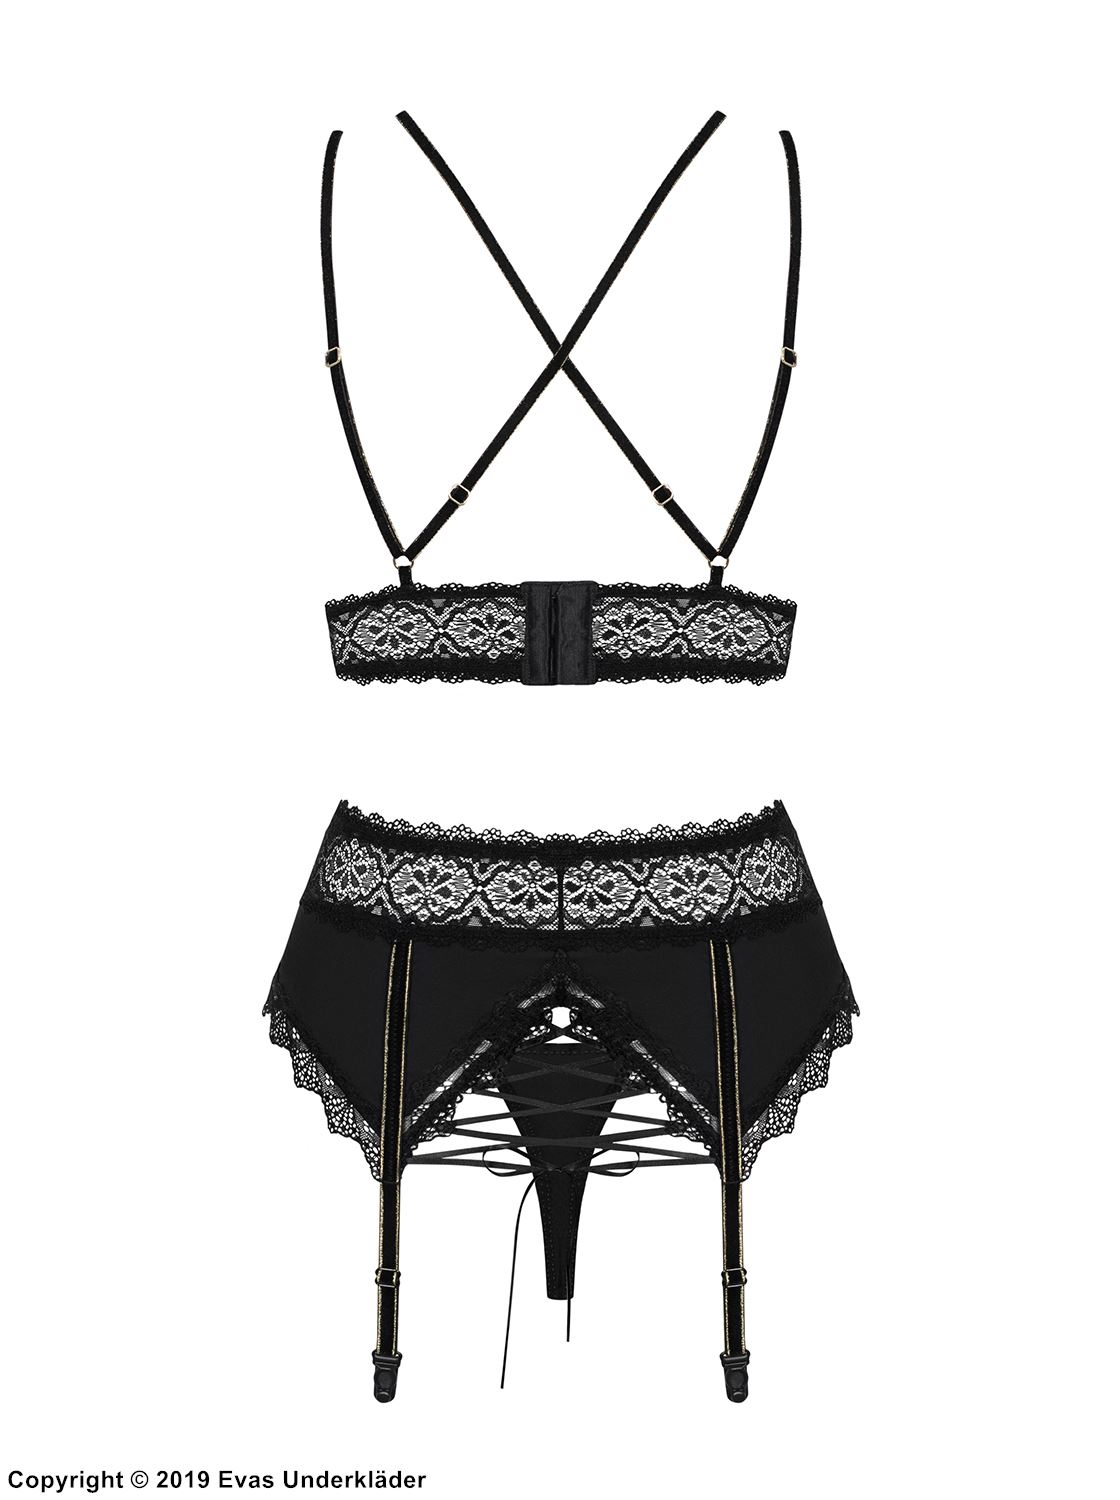 Lingerie set, beautiful lace, crossing straps, garter belt